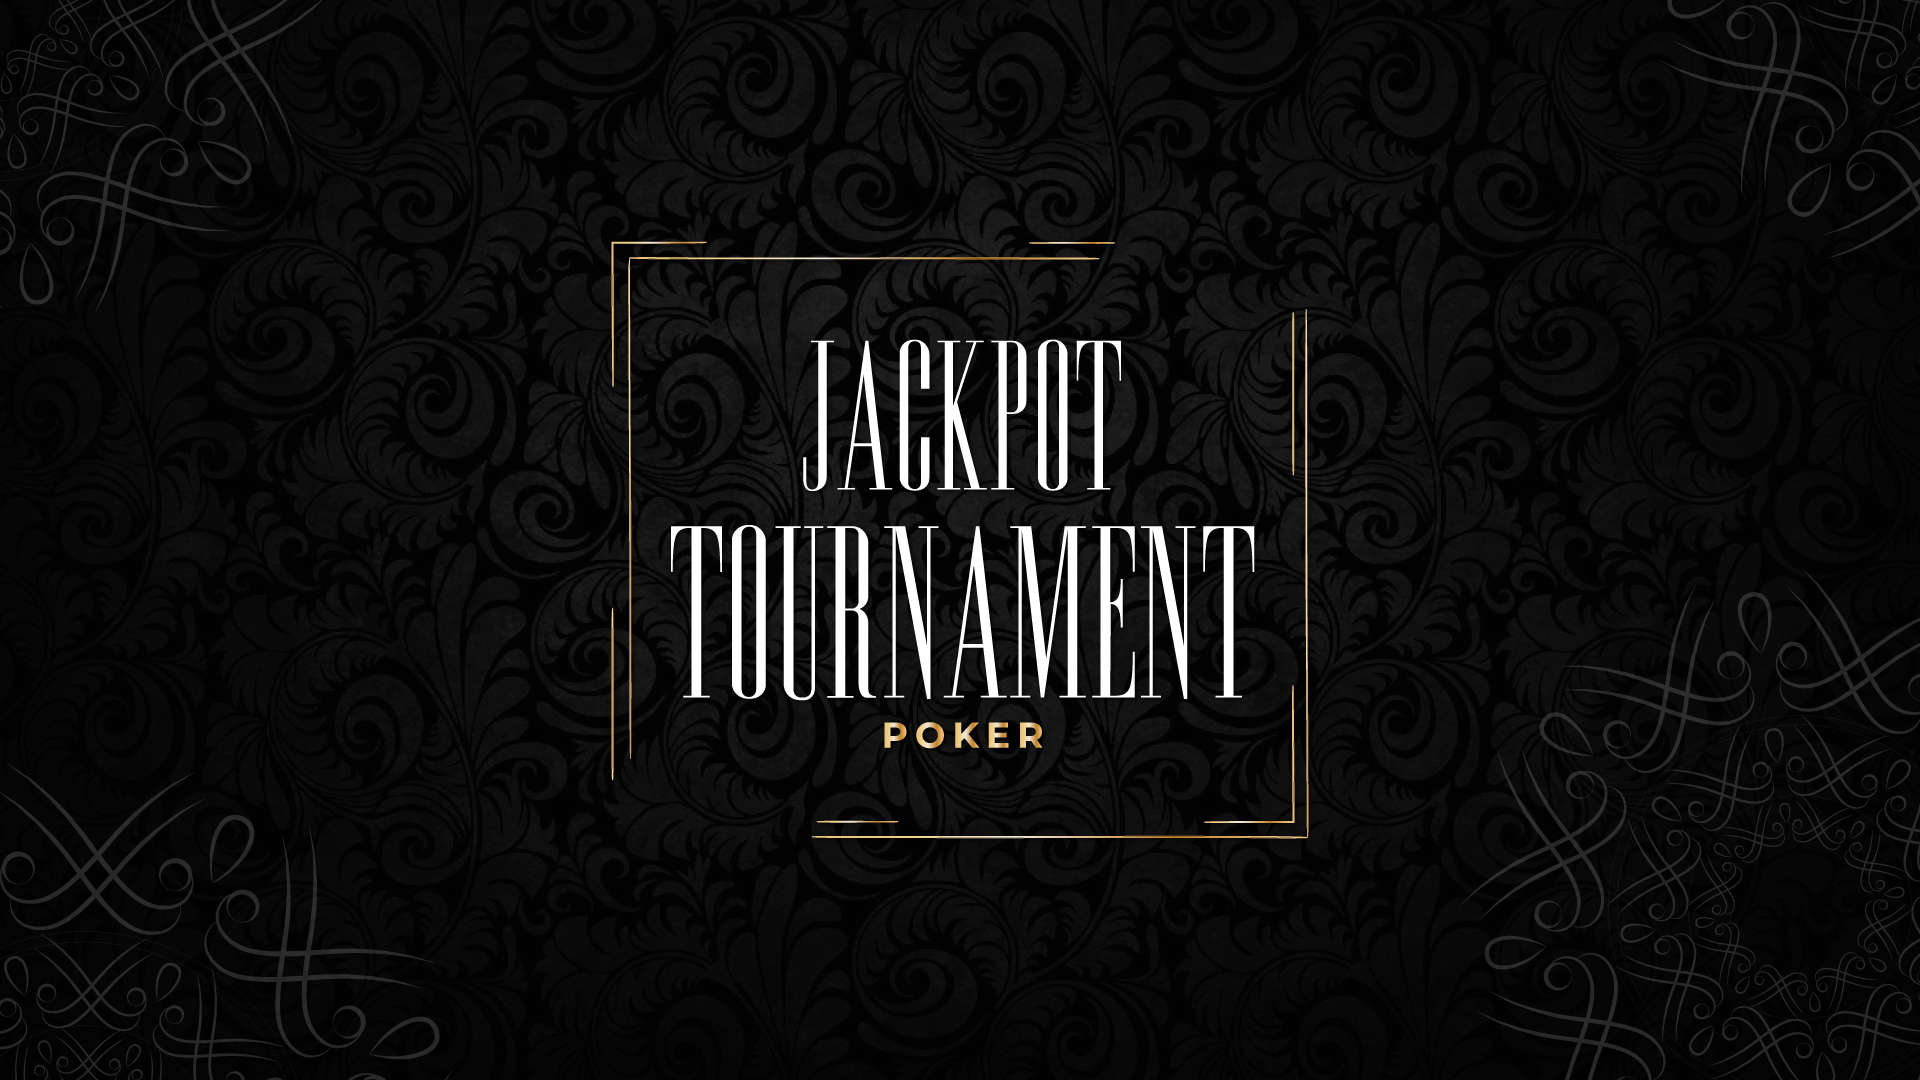 Jackpot Tournament